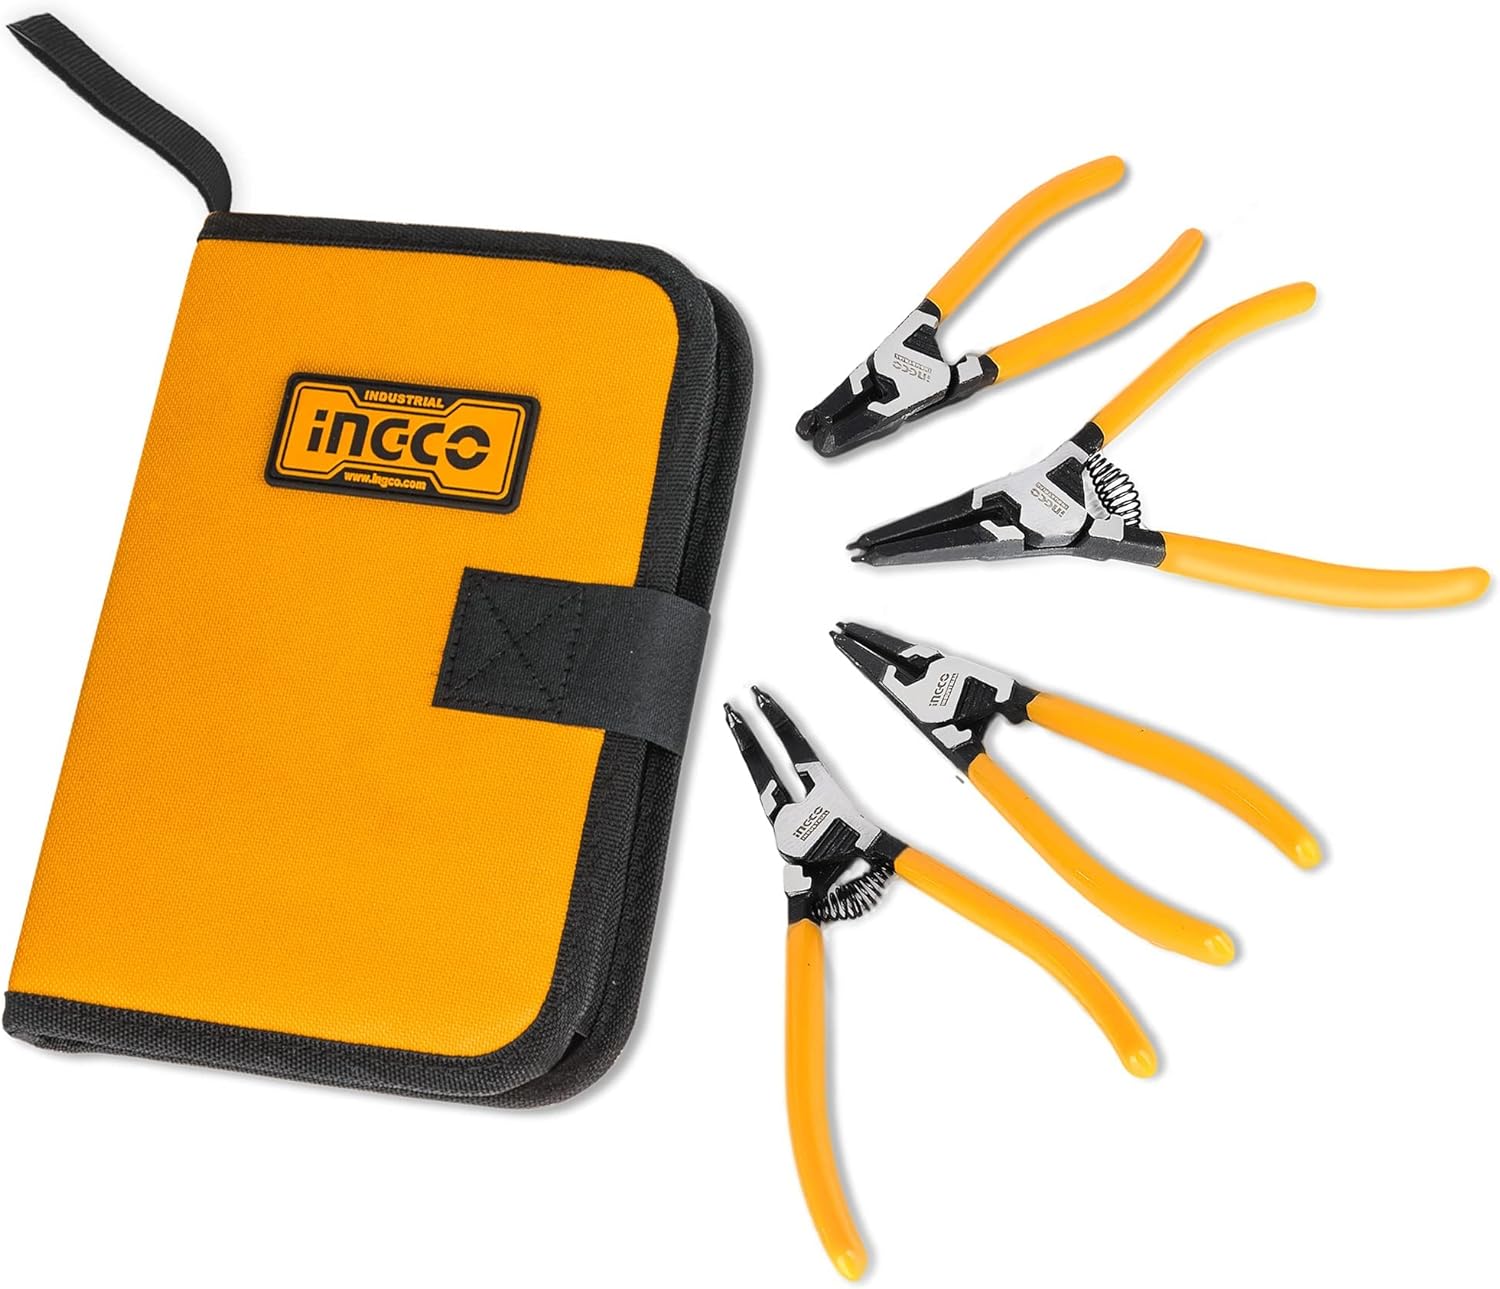 INGCO 4pcs Snap Ring Pliers Set, 5-inch Internal/External Circlip Plier Set Heavy Duty Straight/Bent Tip Retaining Ring Pliers